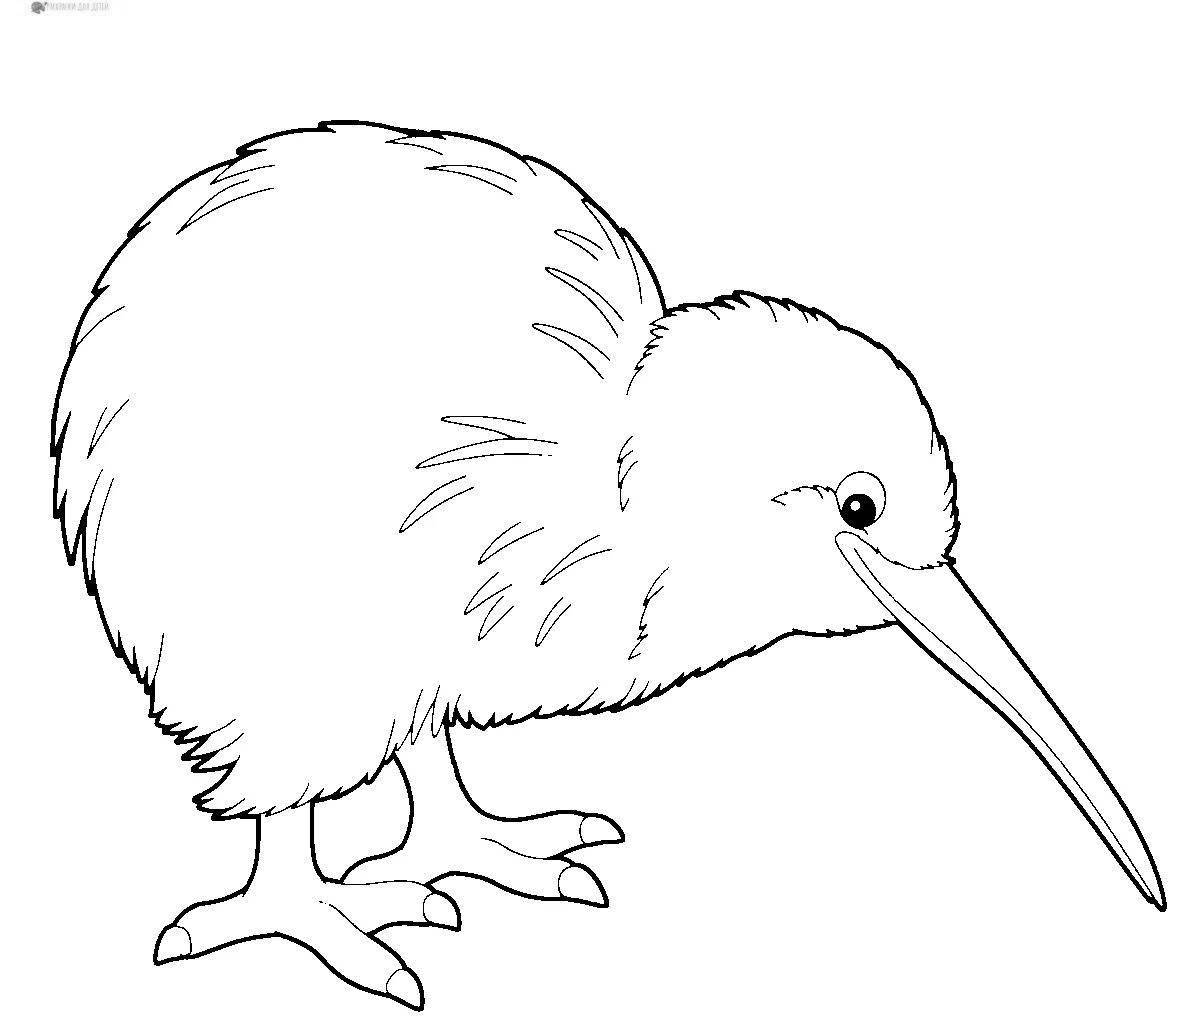 Kiwi bird #3